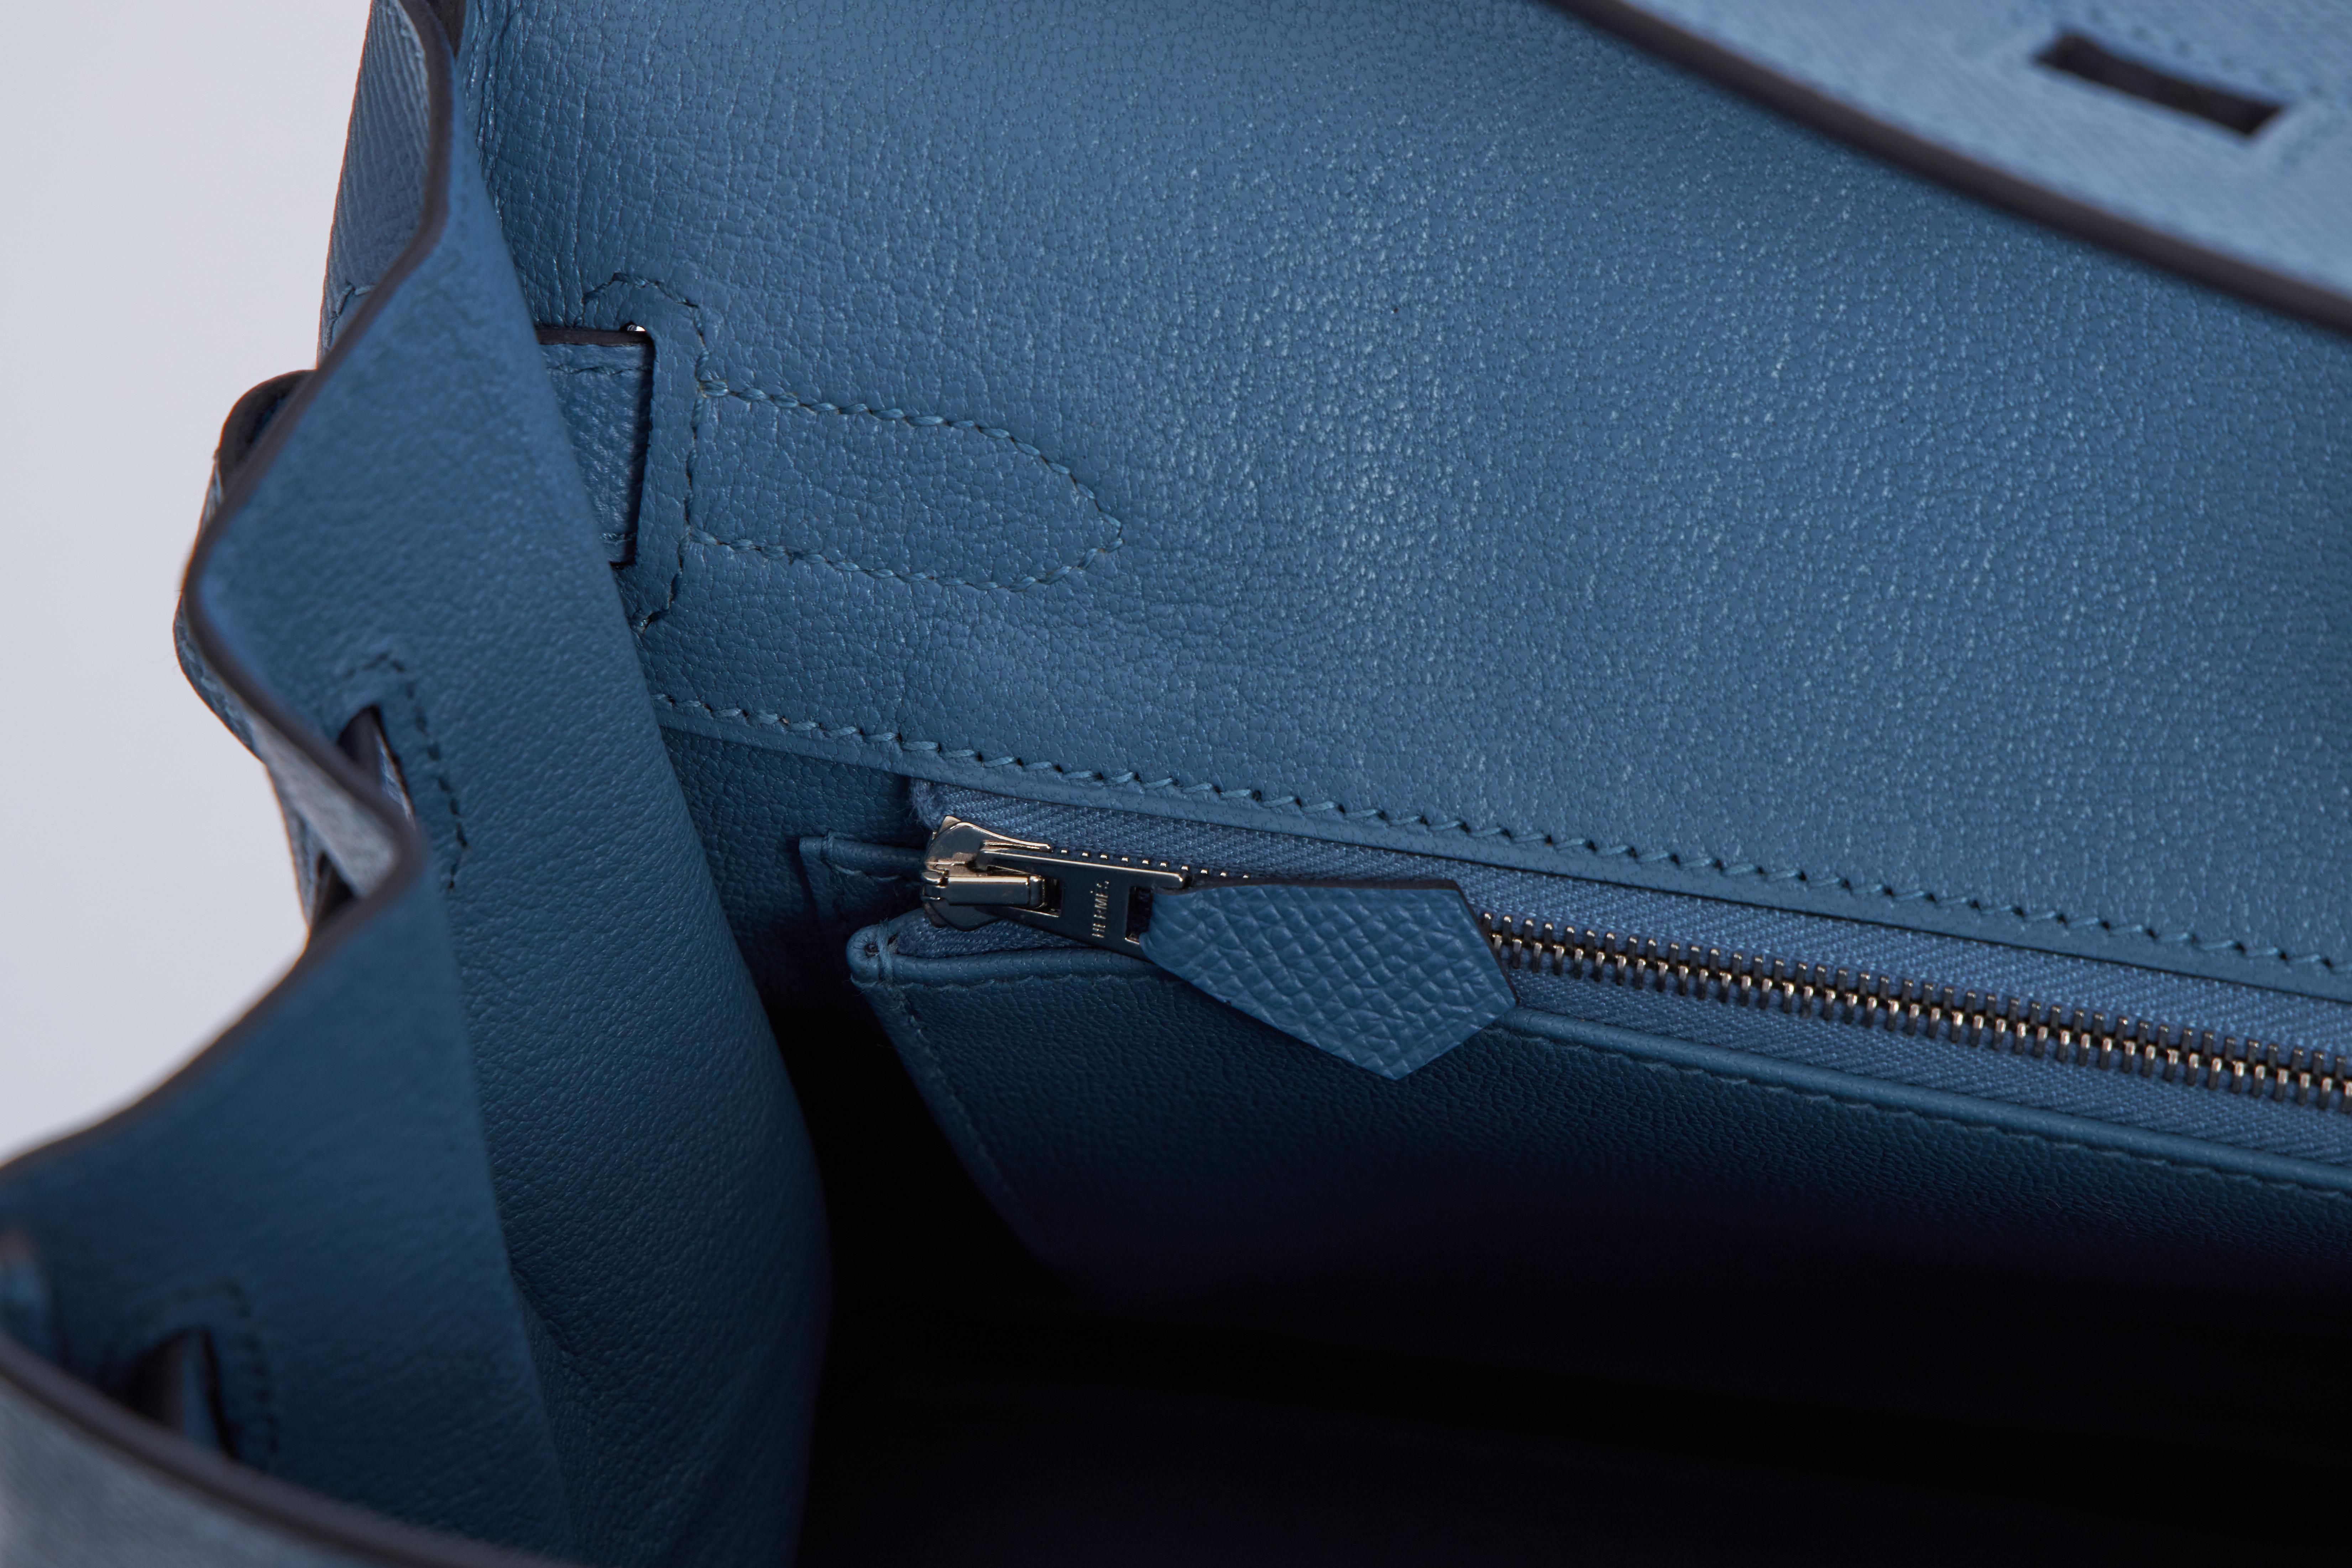 NEW 2018 Hermès 30cm Blue Azur Palladium Birkin Bag in Box 7